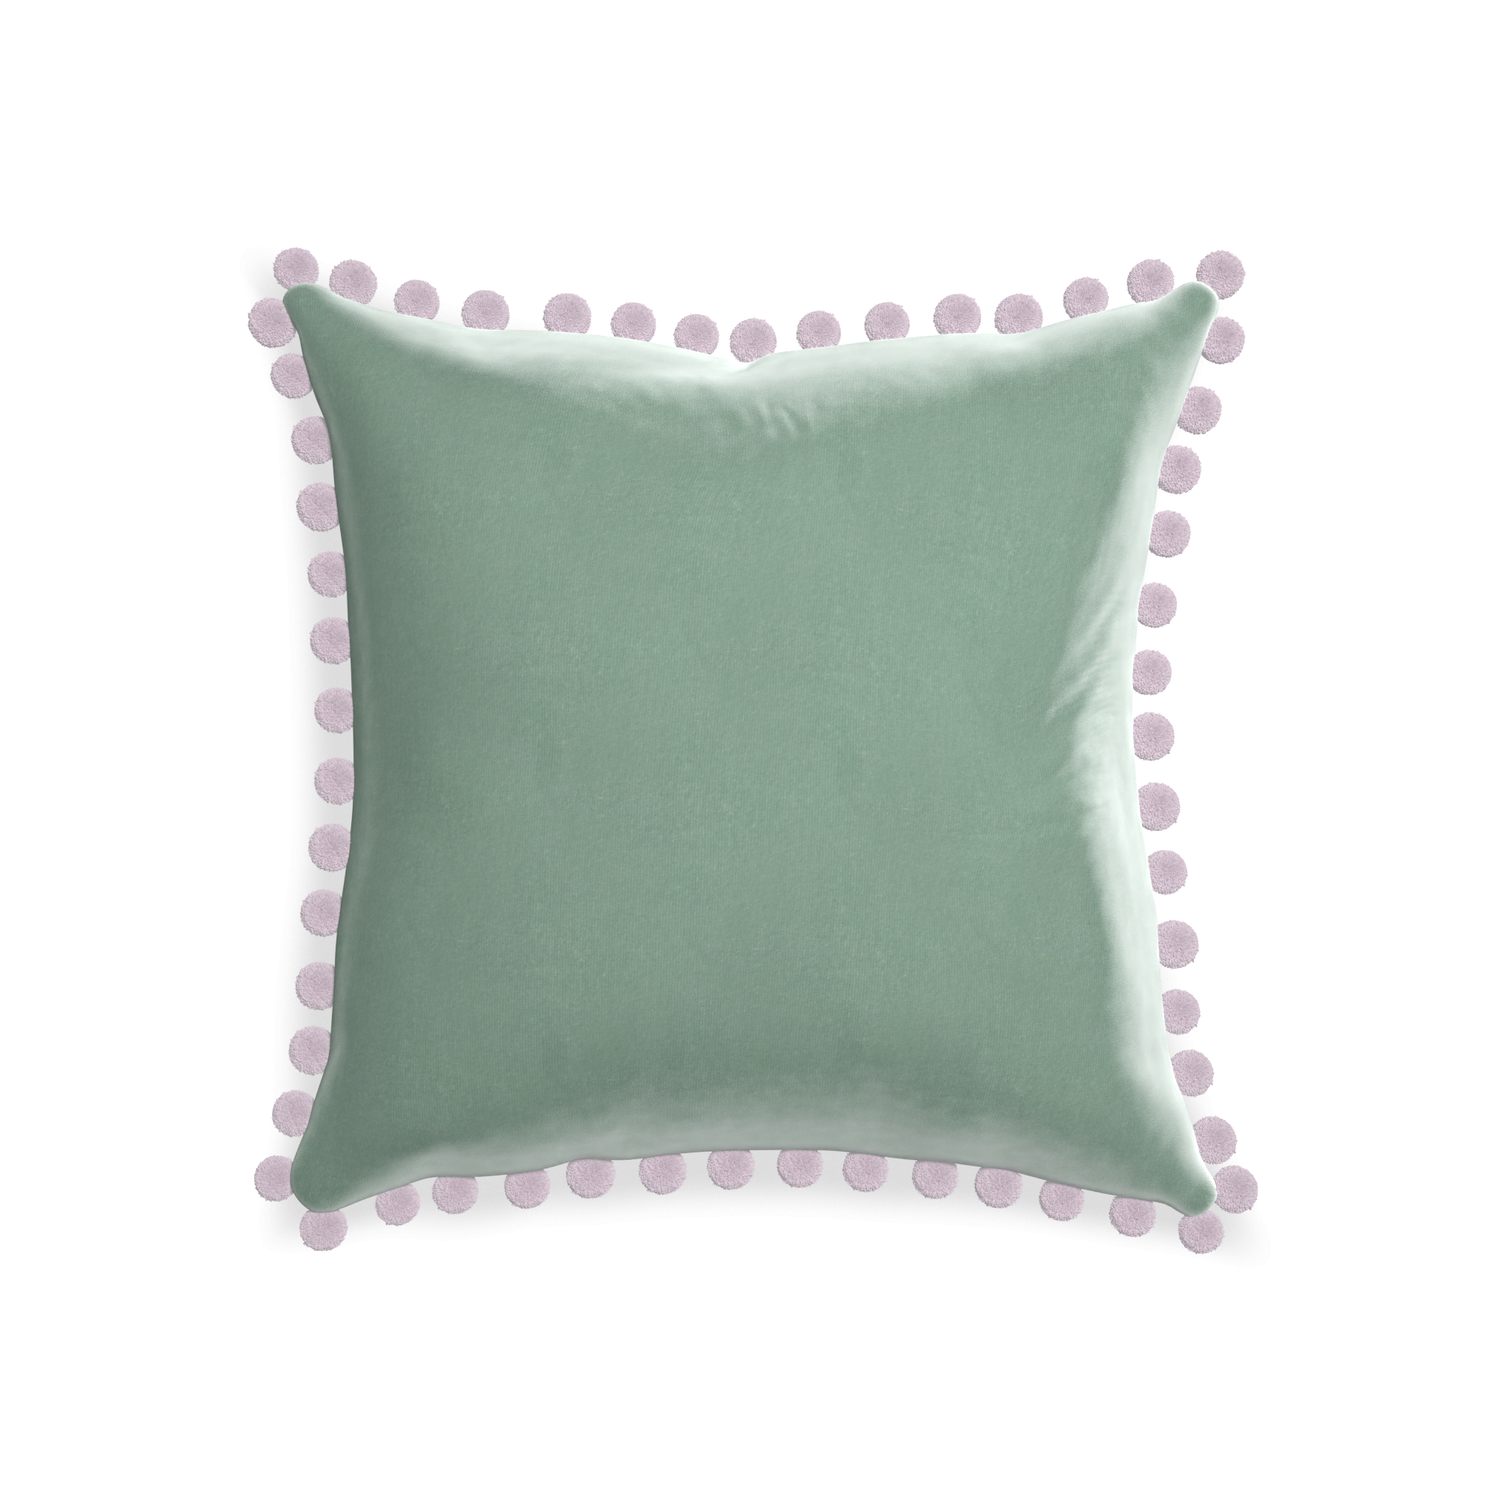 square blue green velvet pillow with lilac pom poms